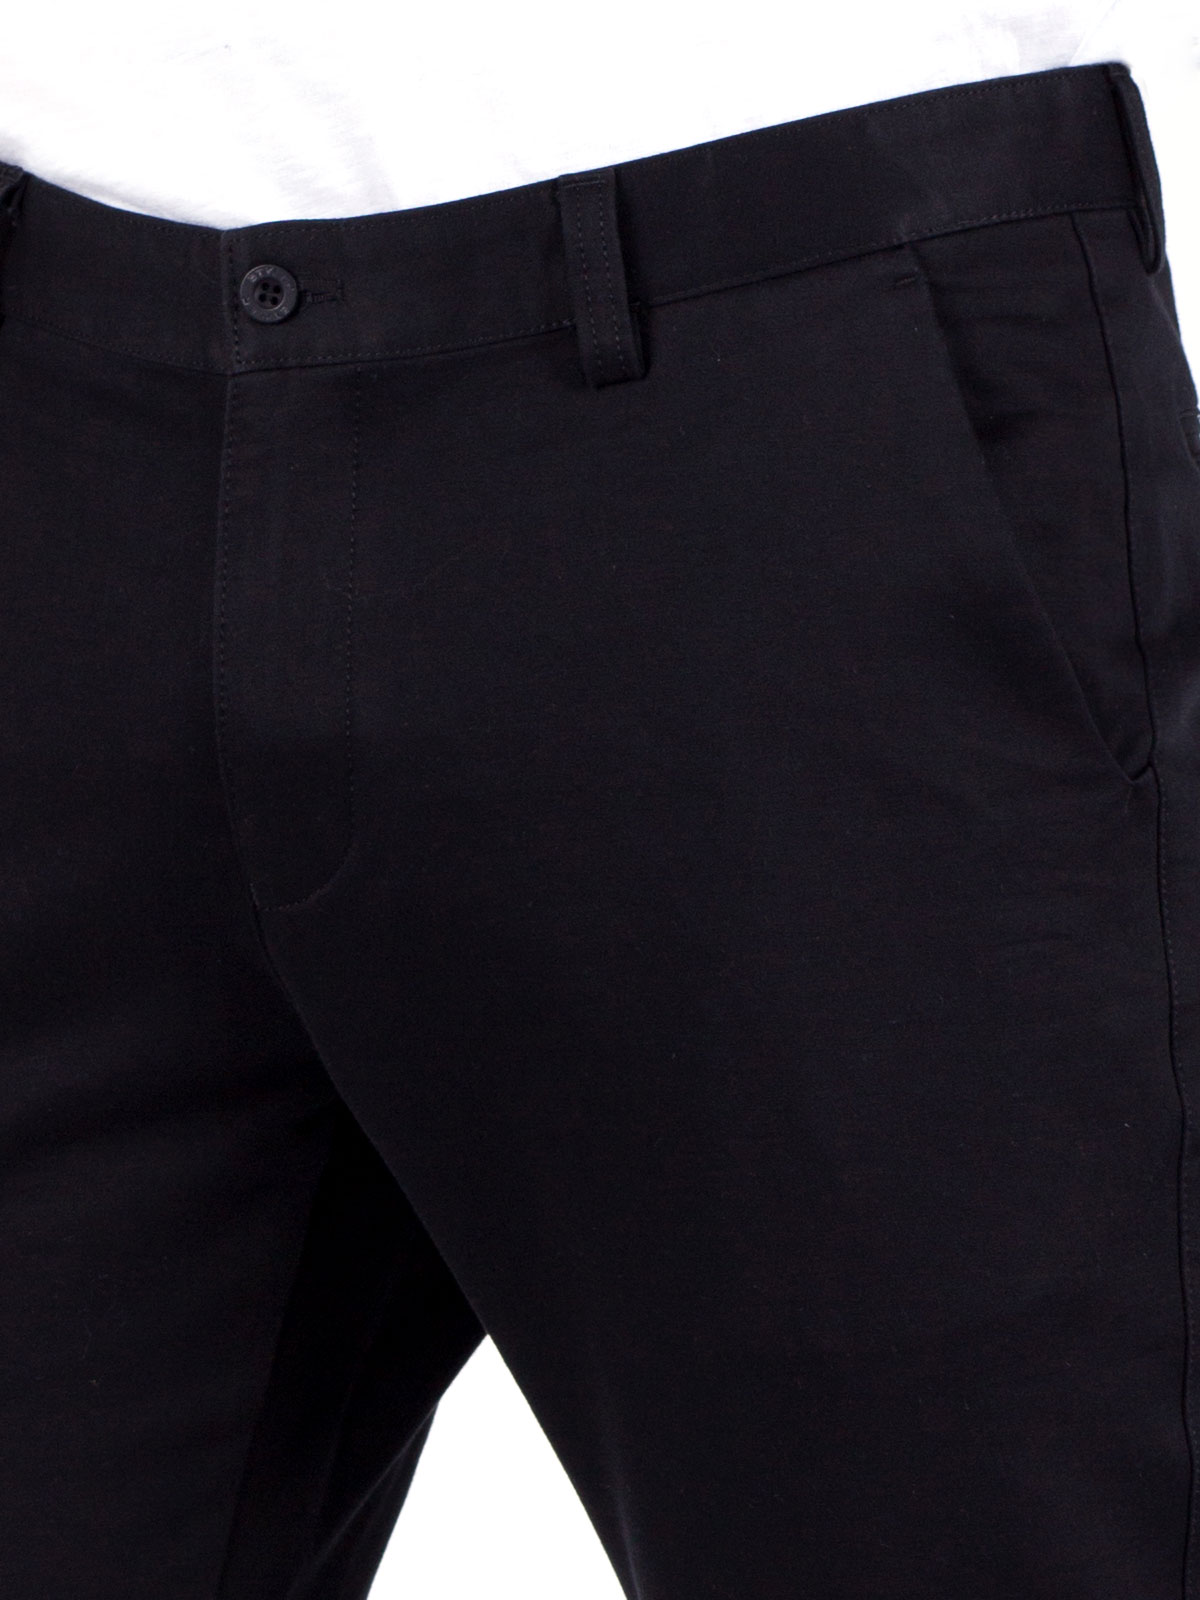 Pantaloni negri din bumbac cu elastan - 60208 € 11.25 img3